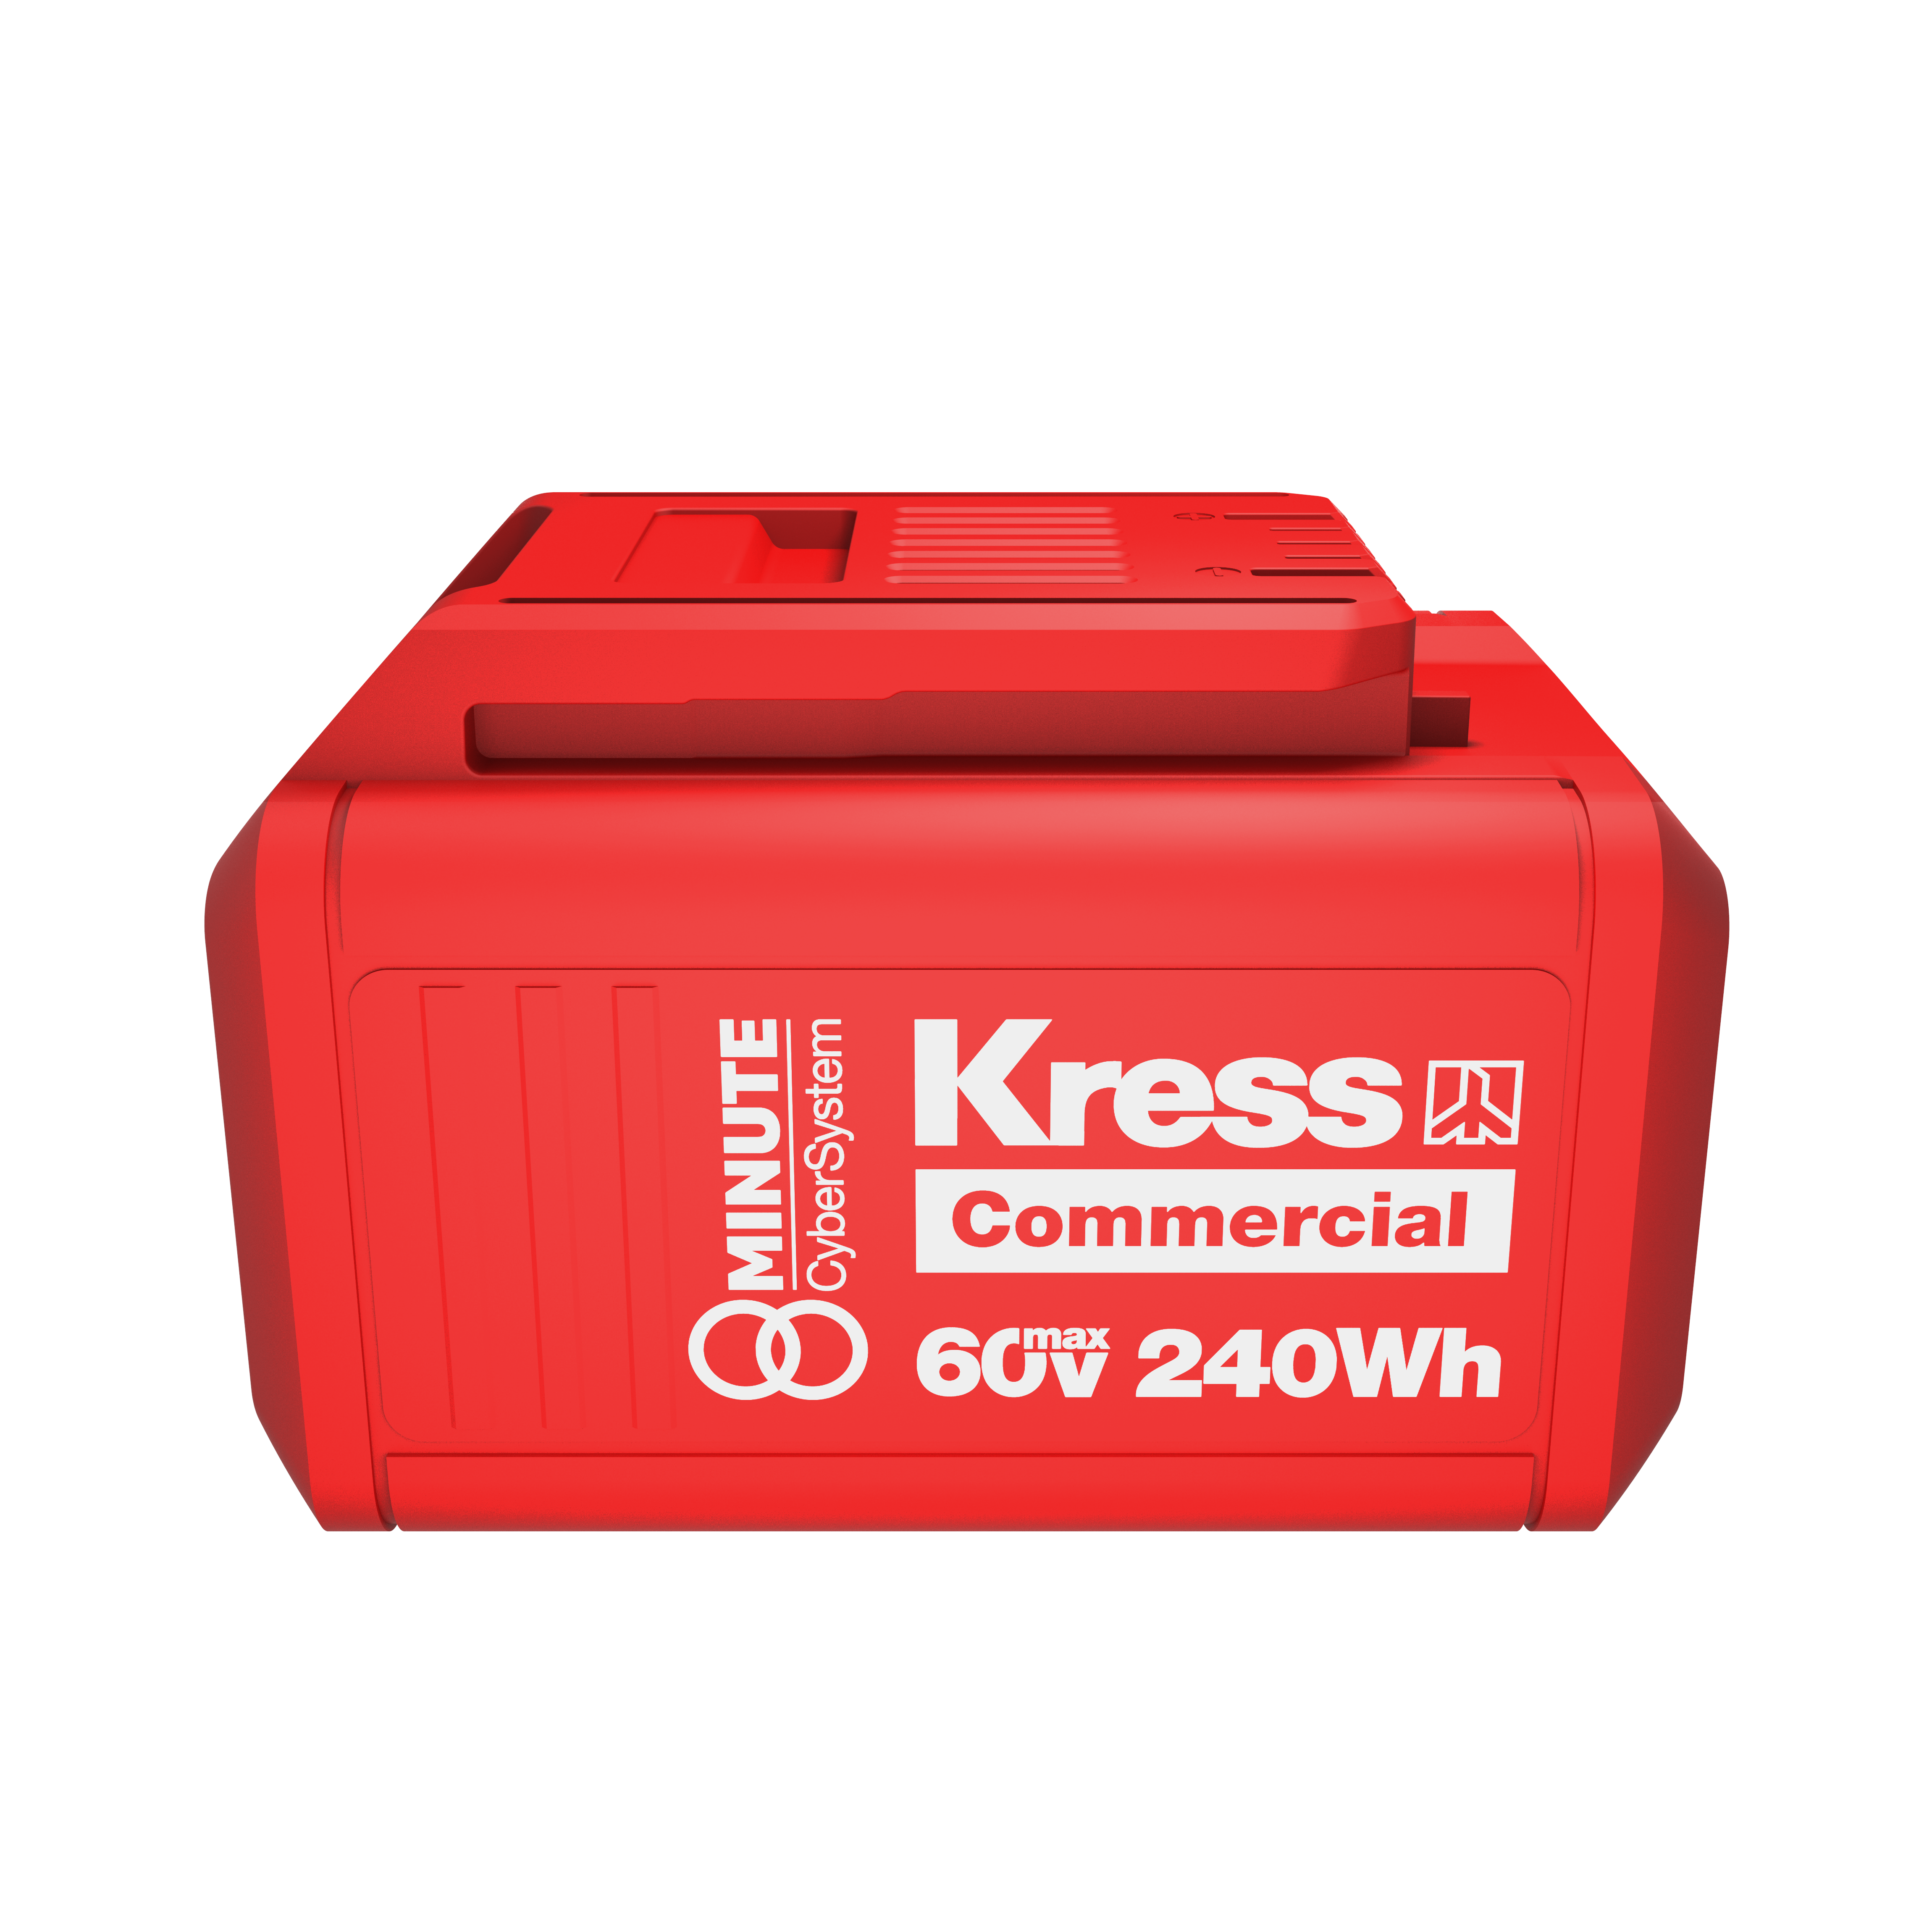 Kress Commerical 60V 240Wh 8-Minuten CyberPack - KAC804